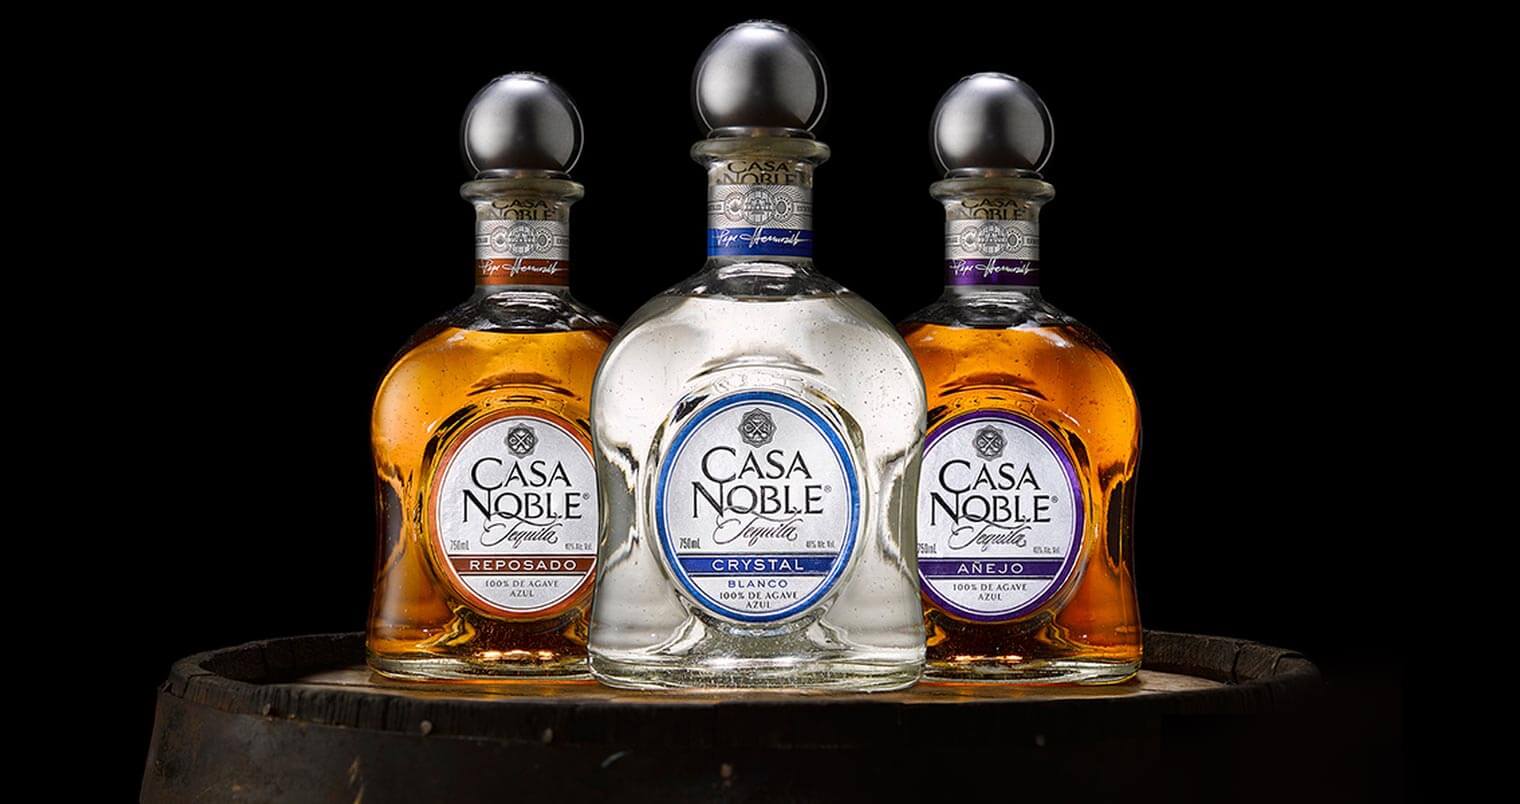 casa noble bottle varieties on black background, featured image